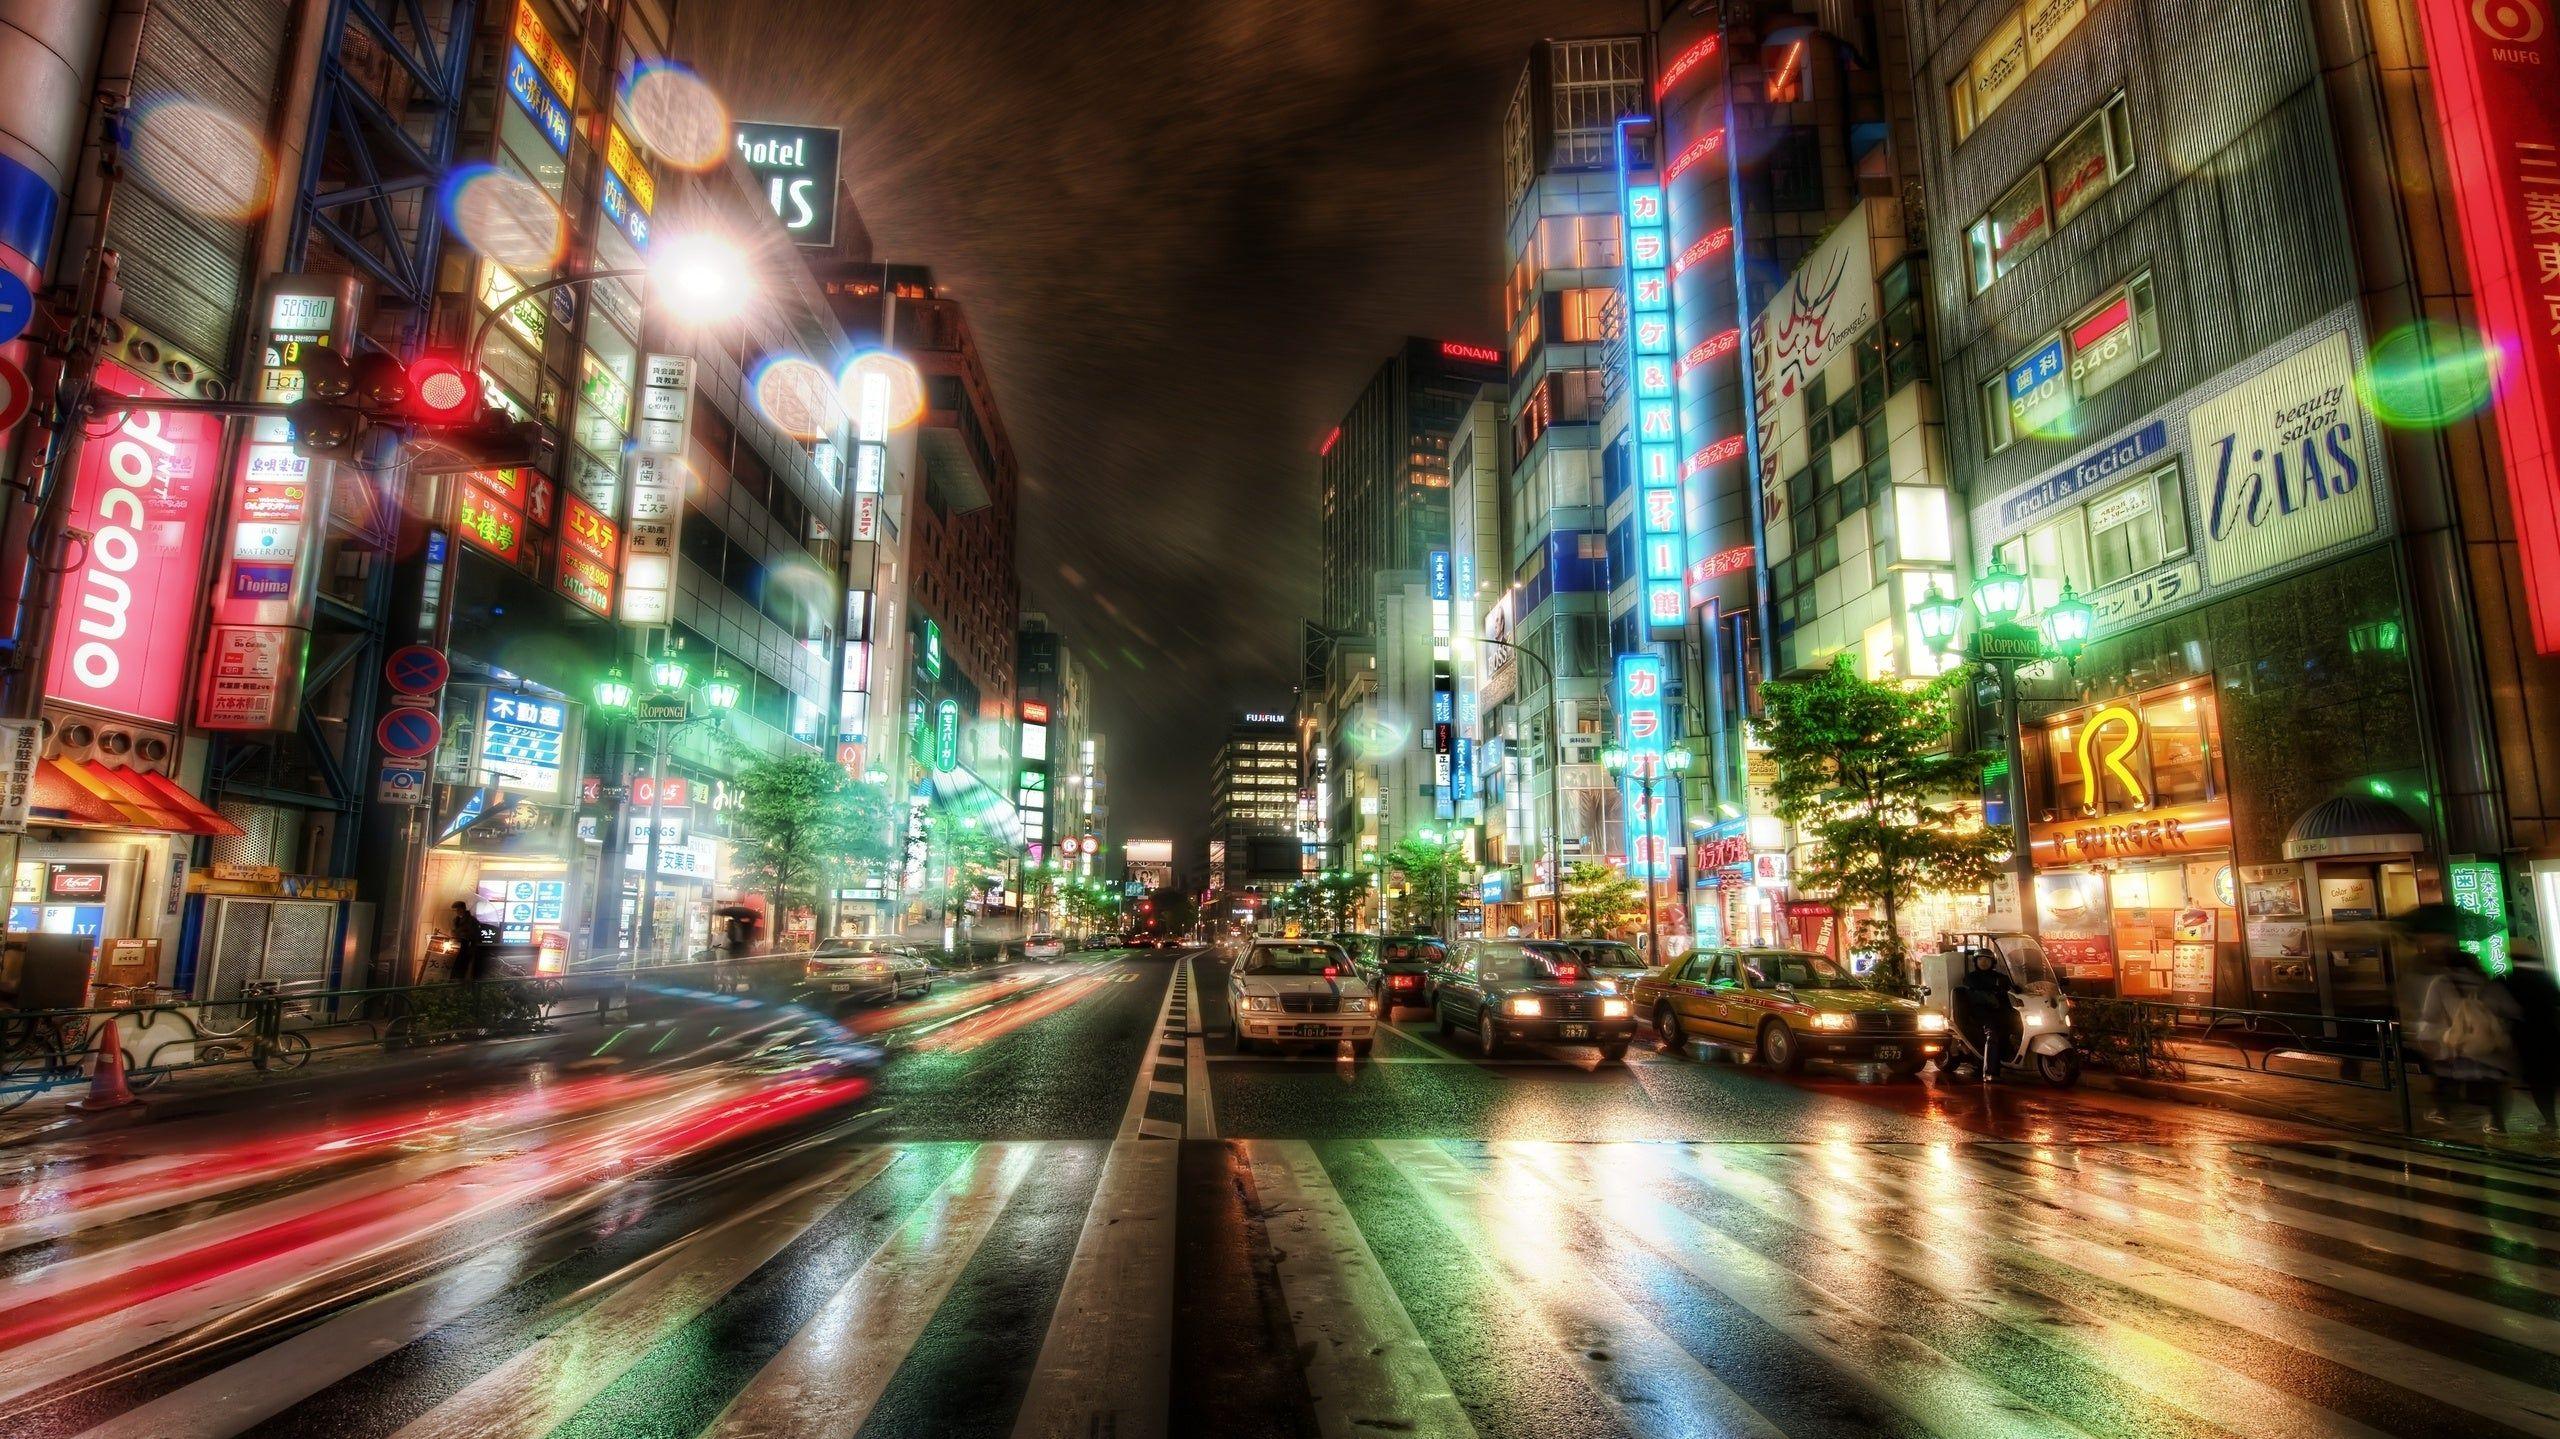 Tokyo Street Scene wallpaper in 2560x1440 resolution